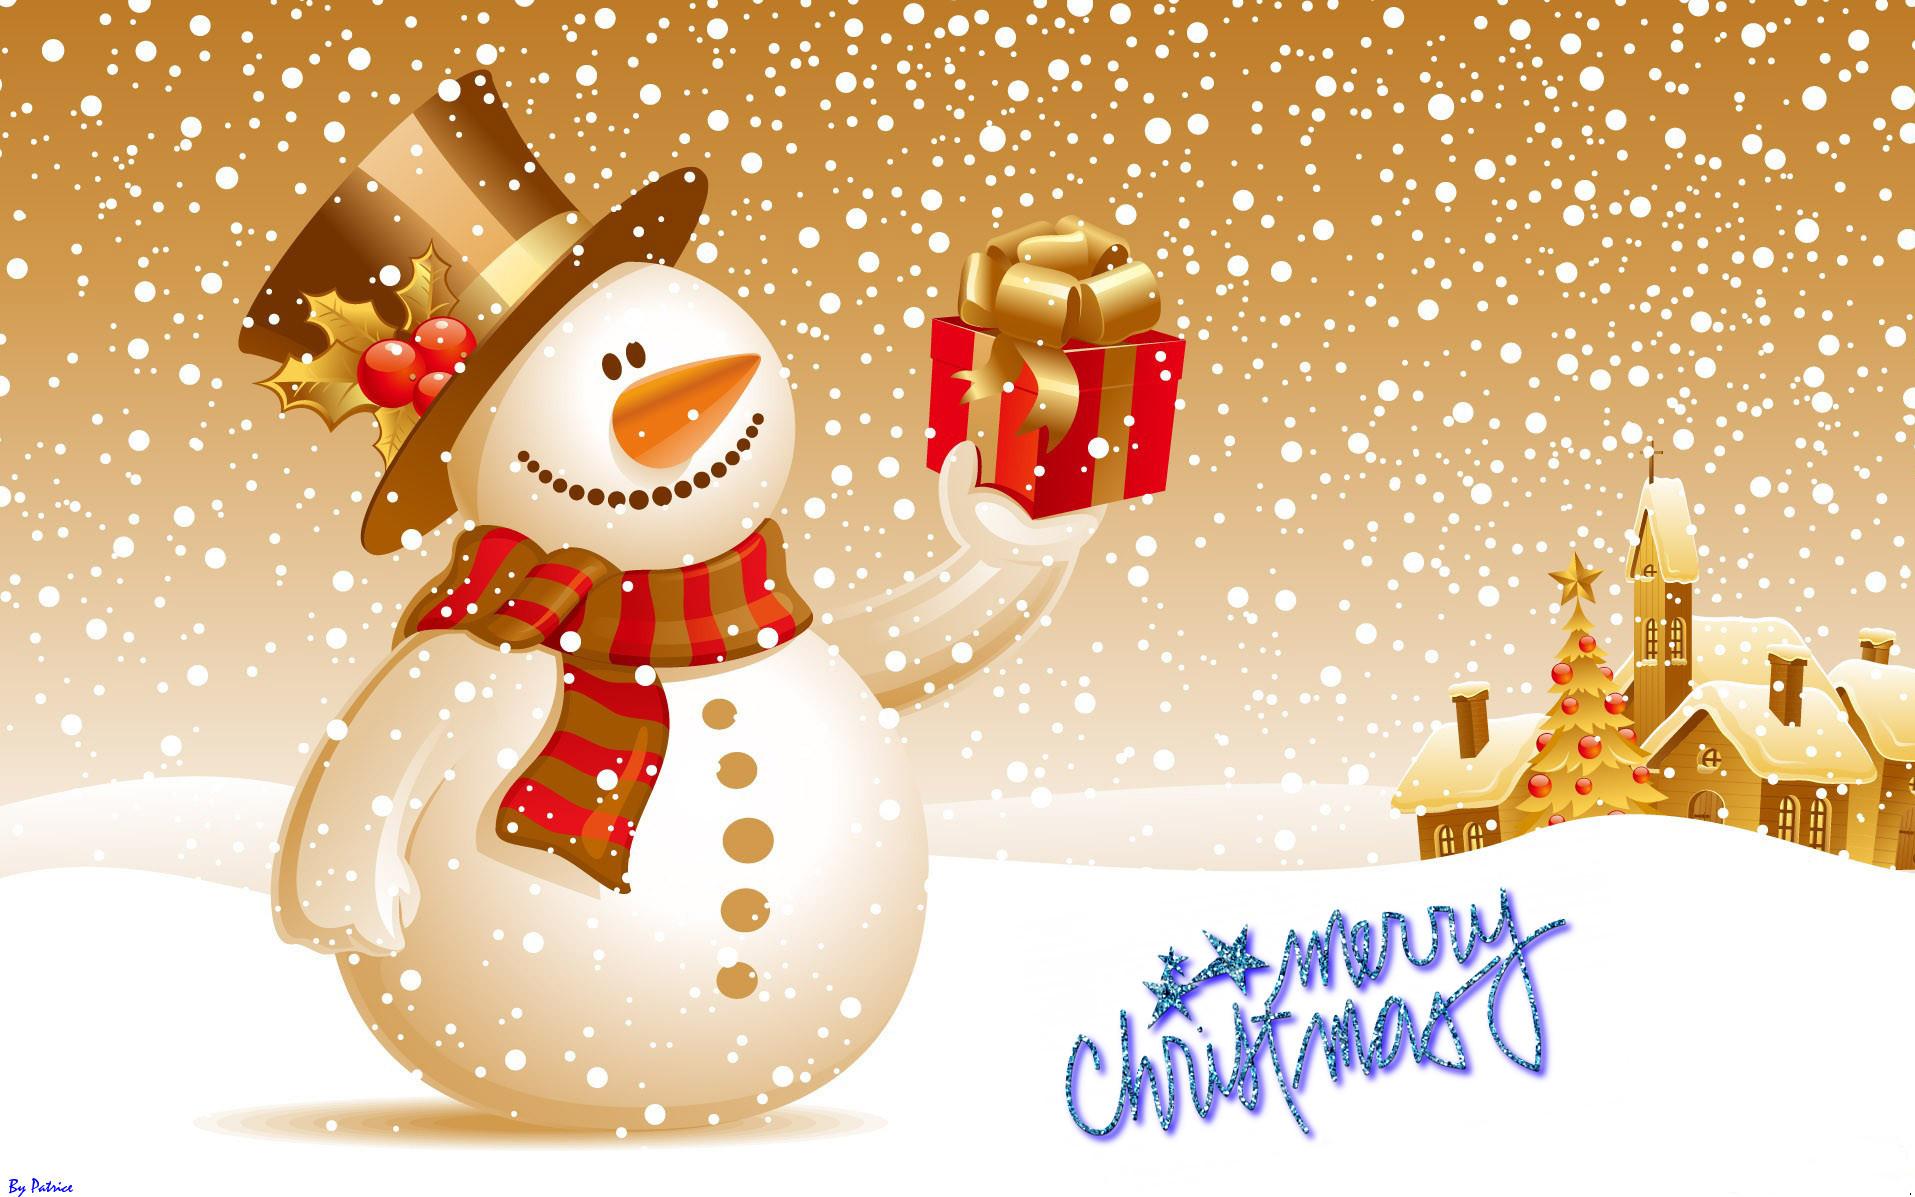 Cute Snowman Merry Christmas Images Wallpaper 7427 Wallpaper computer